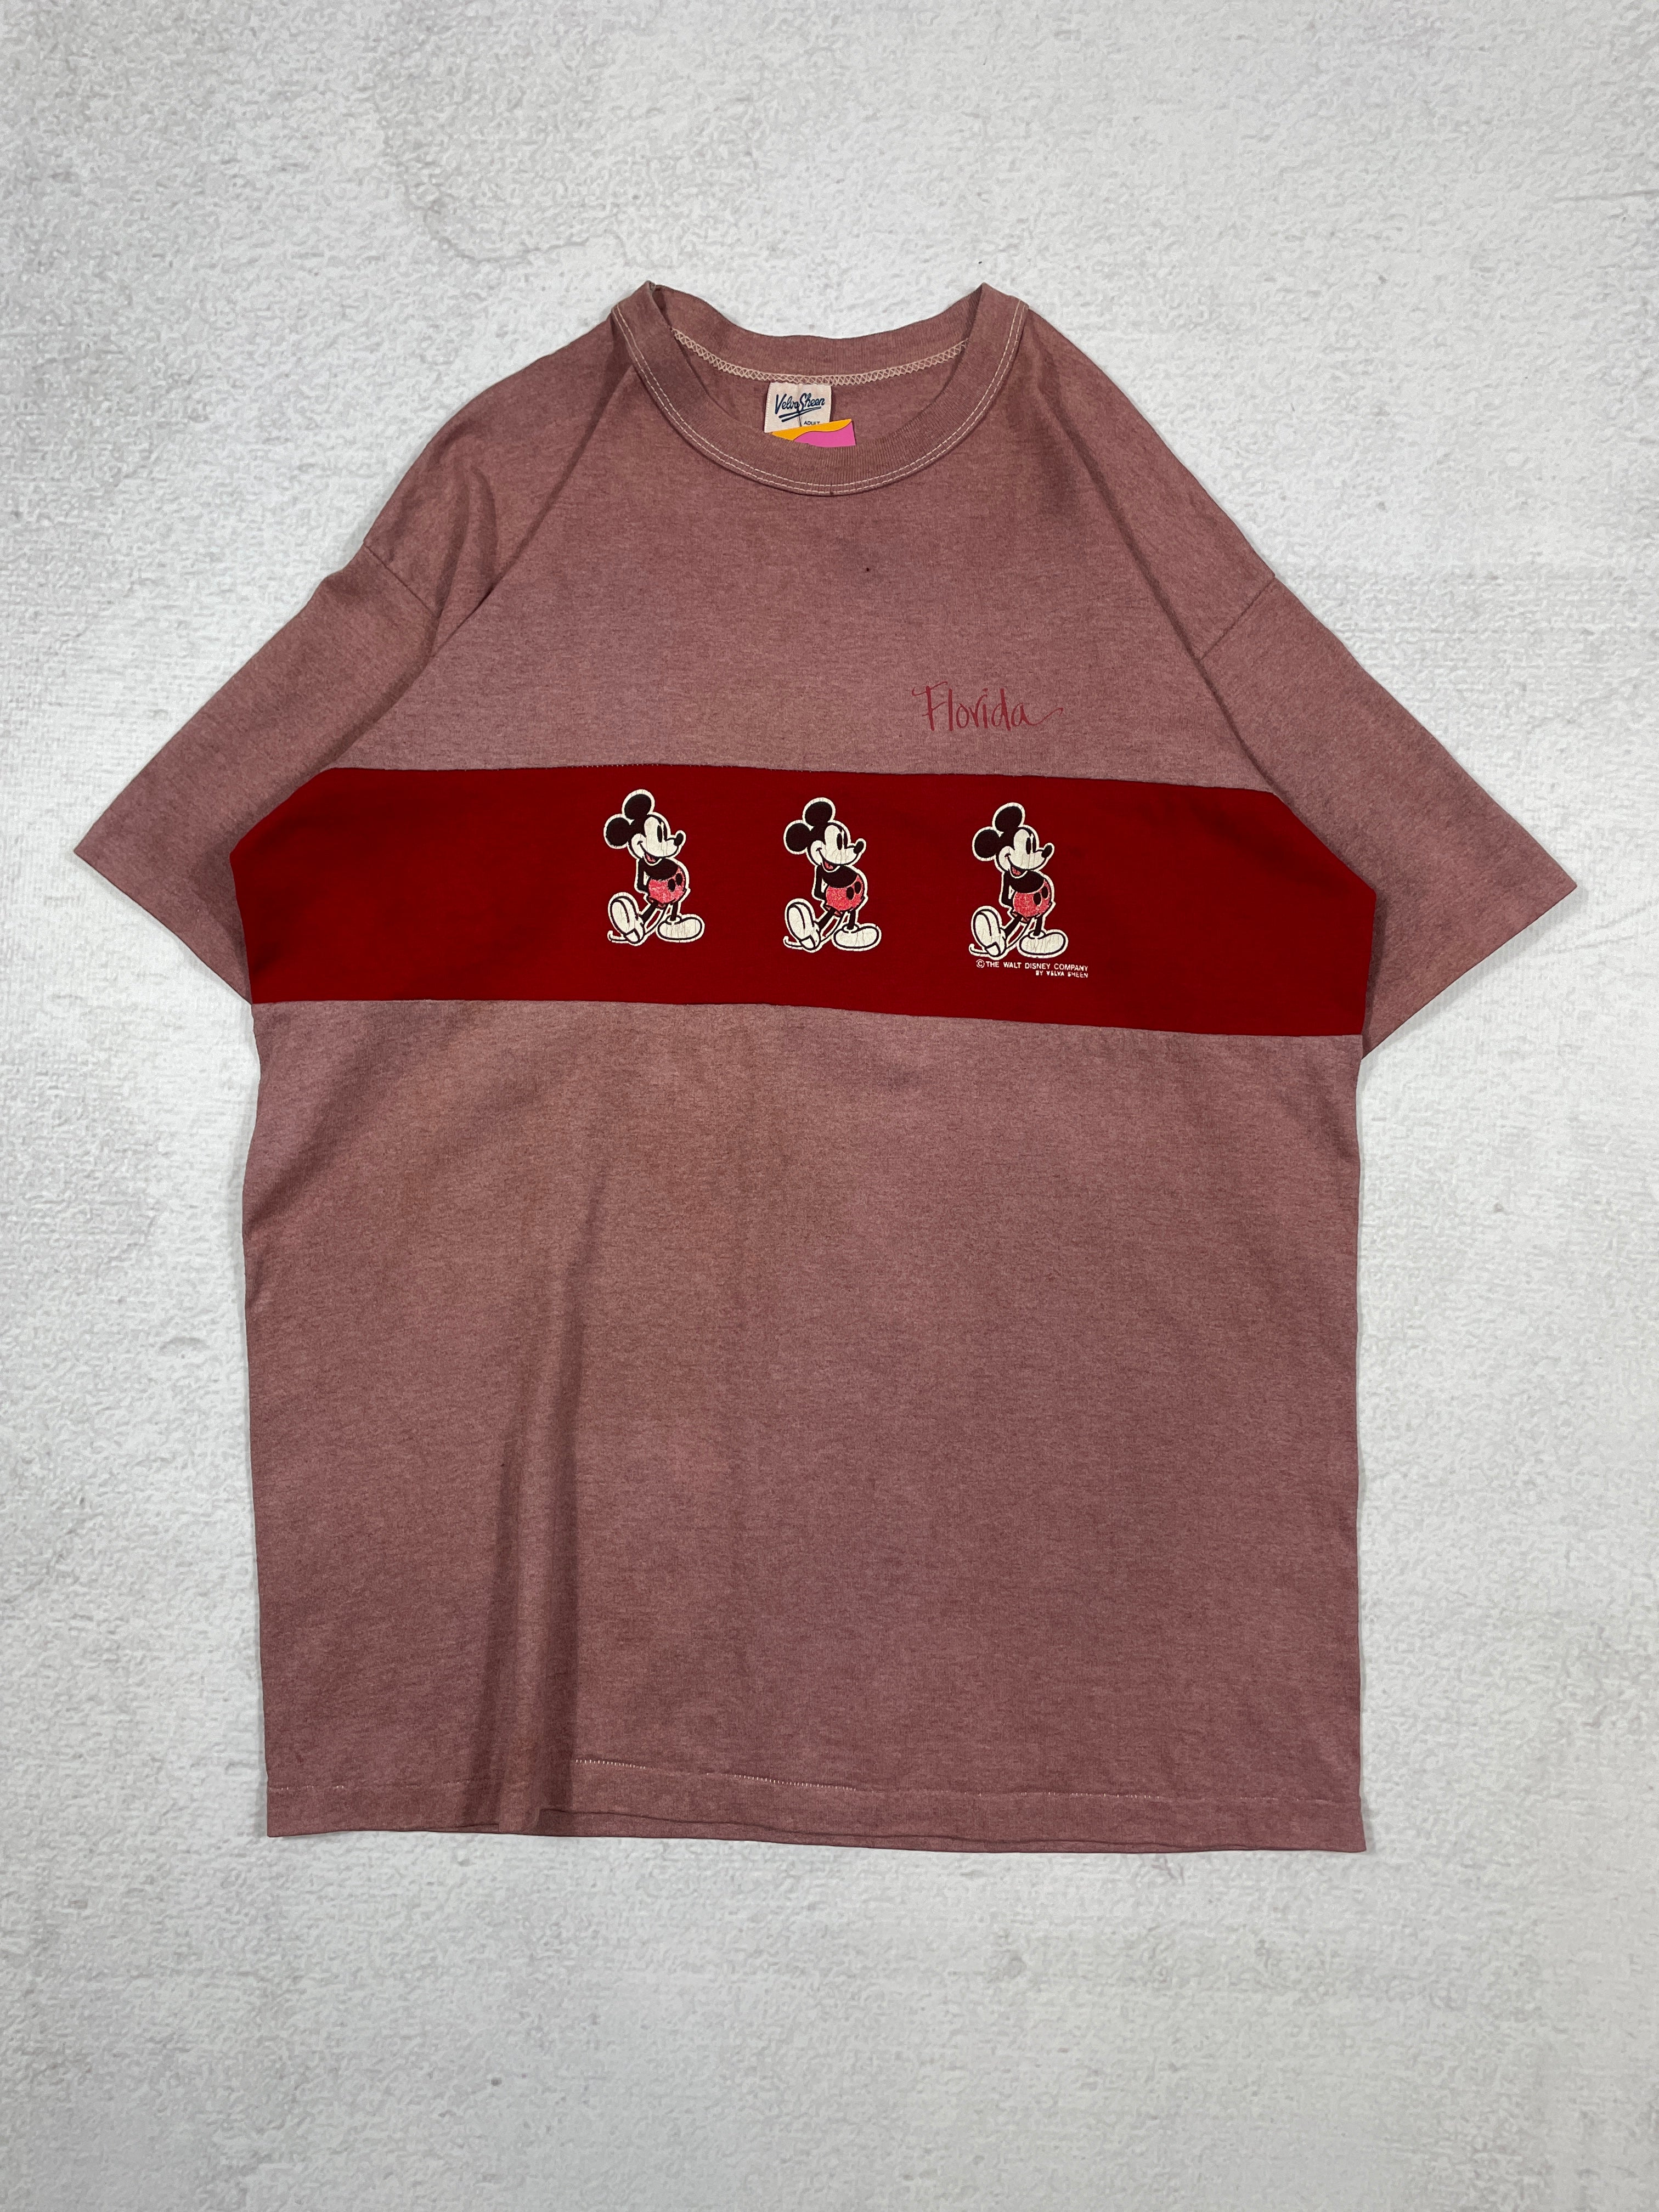 Vintage Dyed Disney Florida T-Shirt - Men's Medium